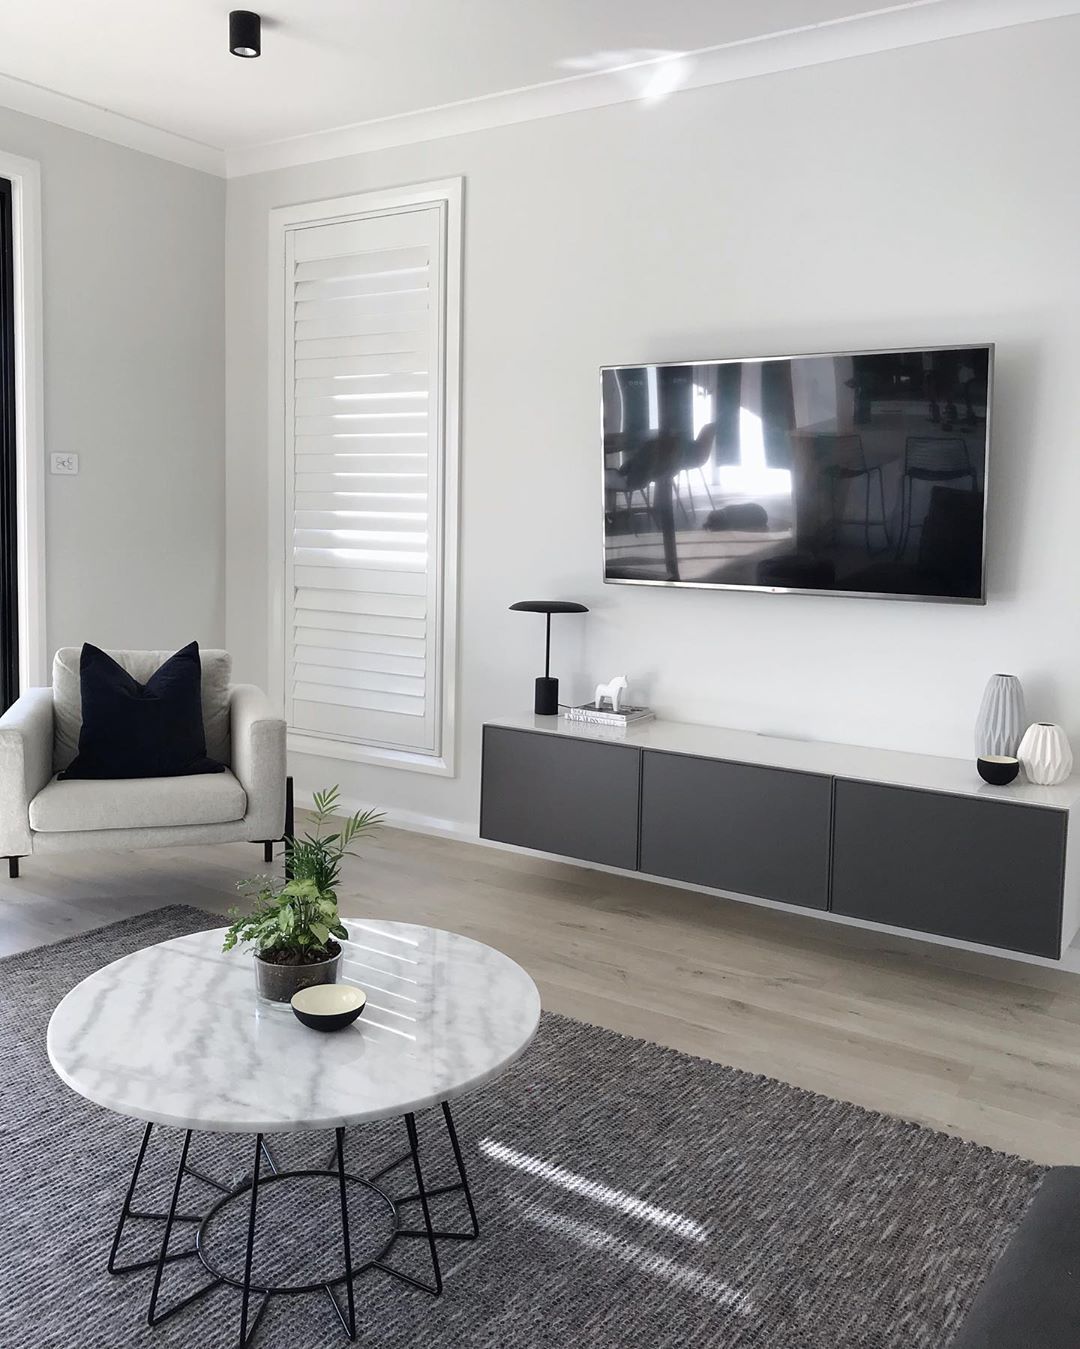 Minimalist Living Room with Marble Table and Gray Rug via @housetwentyfive